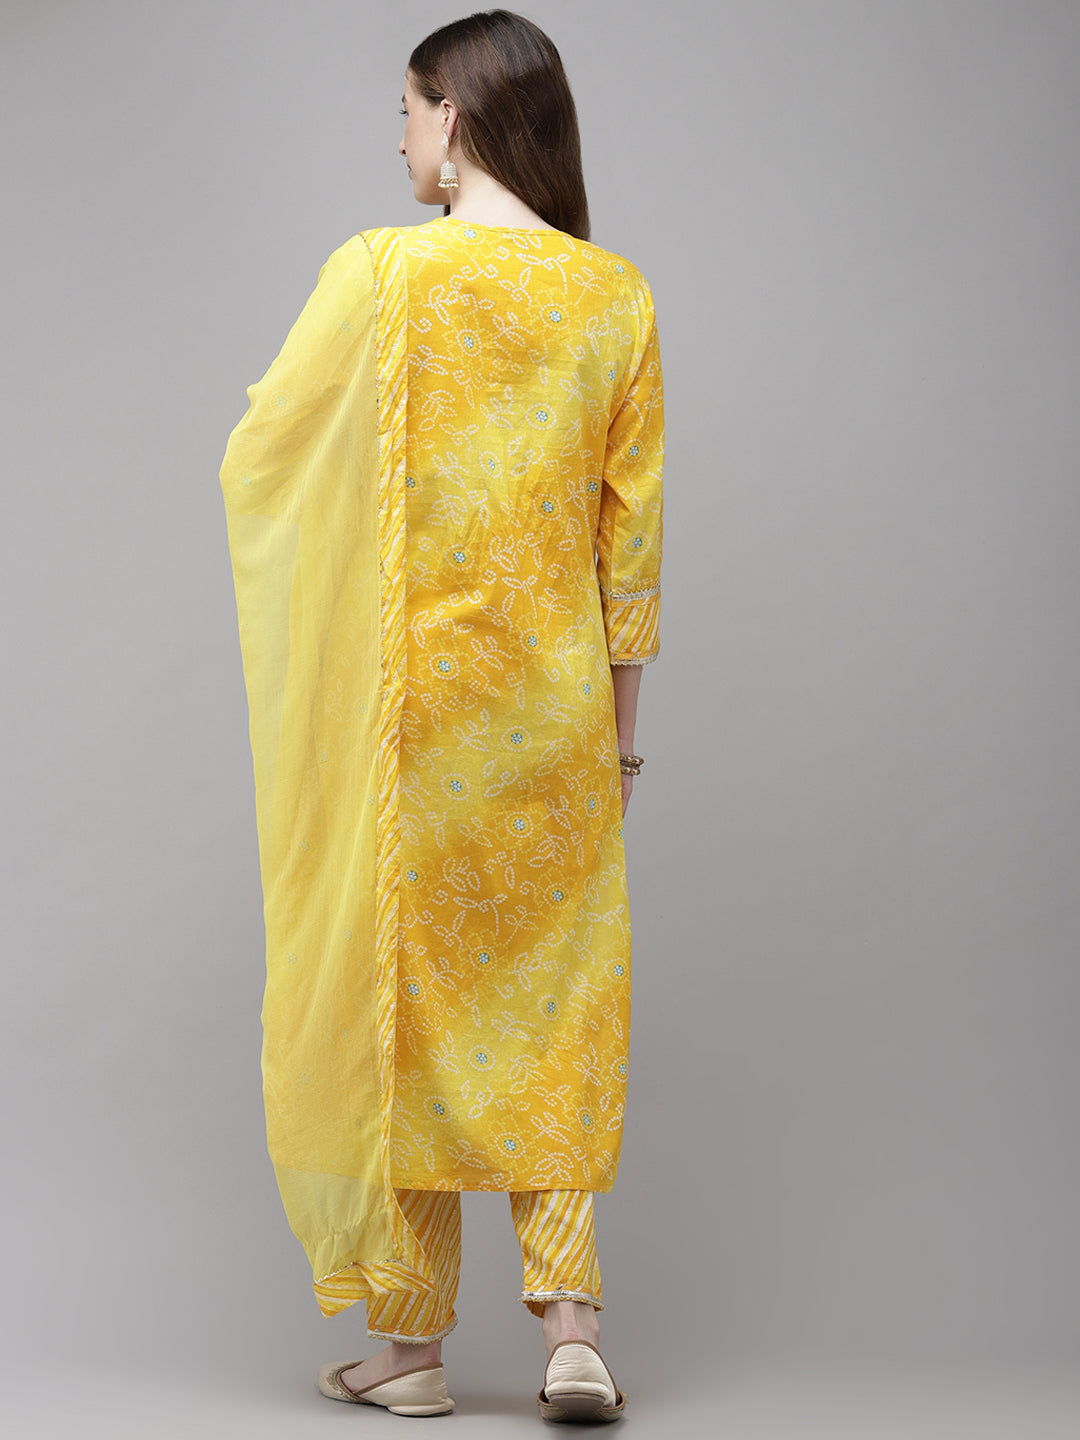 Ishin Women's Cotton Yellow Embroidered Tie & Dye A-Line Kurta Trouser Dupatta Set 